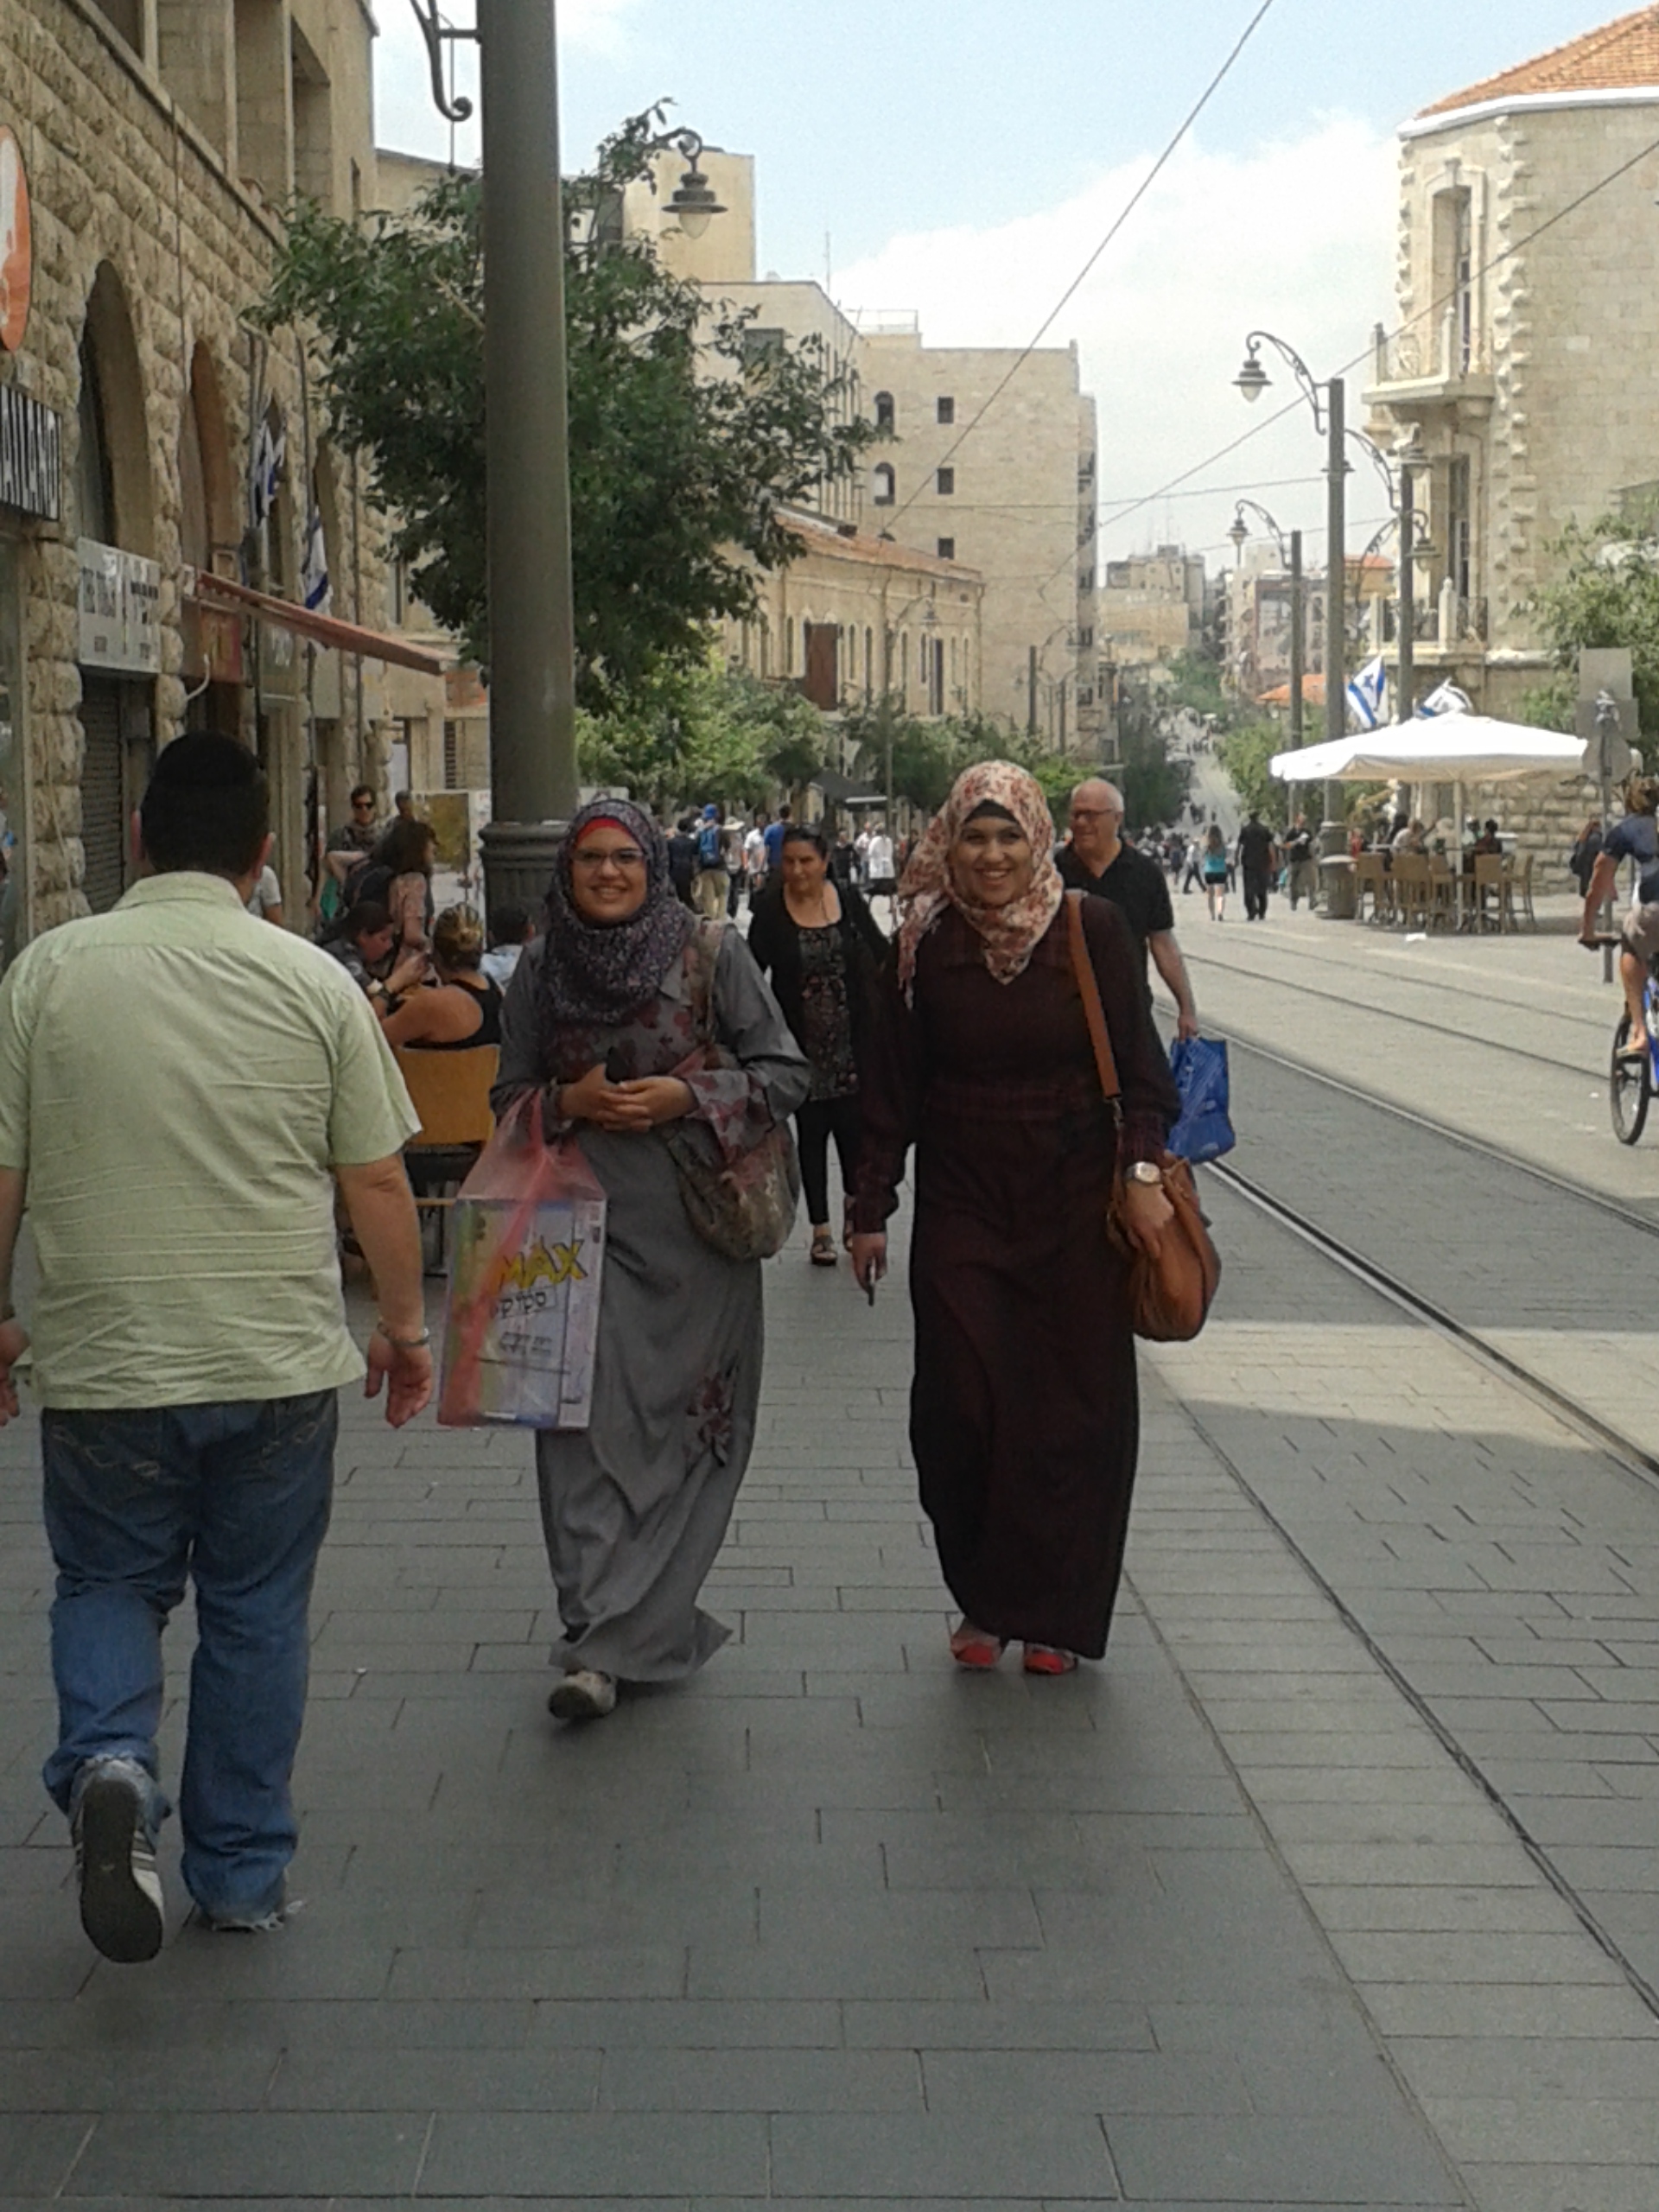 Jaffa Road, Jerusalem – a haven of peace on the Sabbath